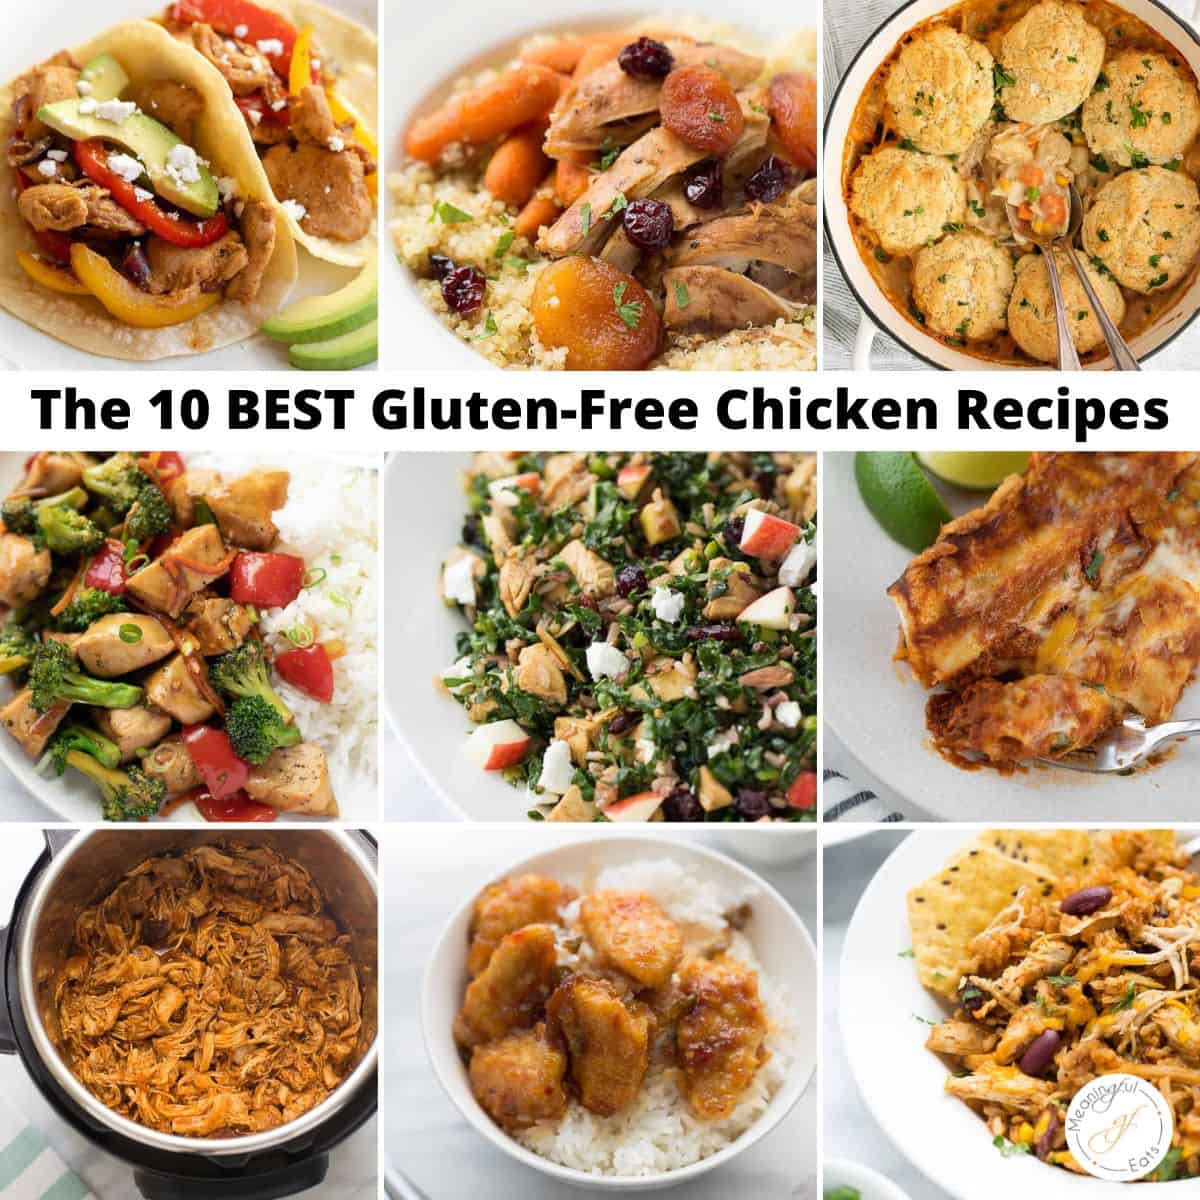 Top 10 Gluten Free En Recipes For